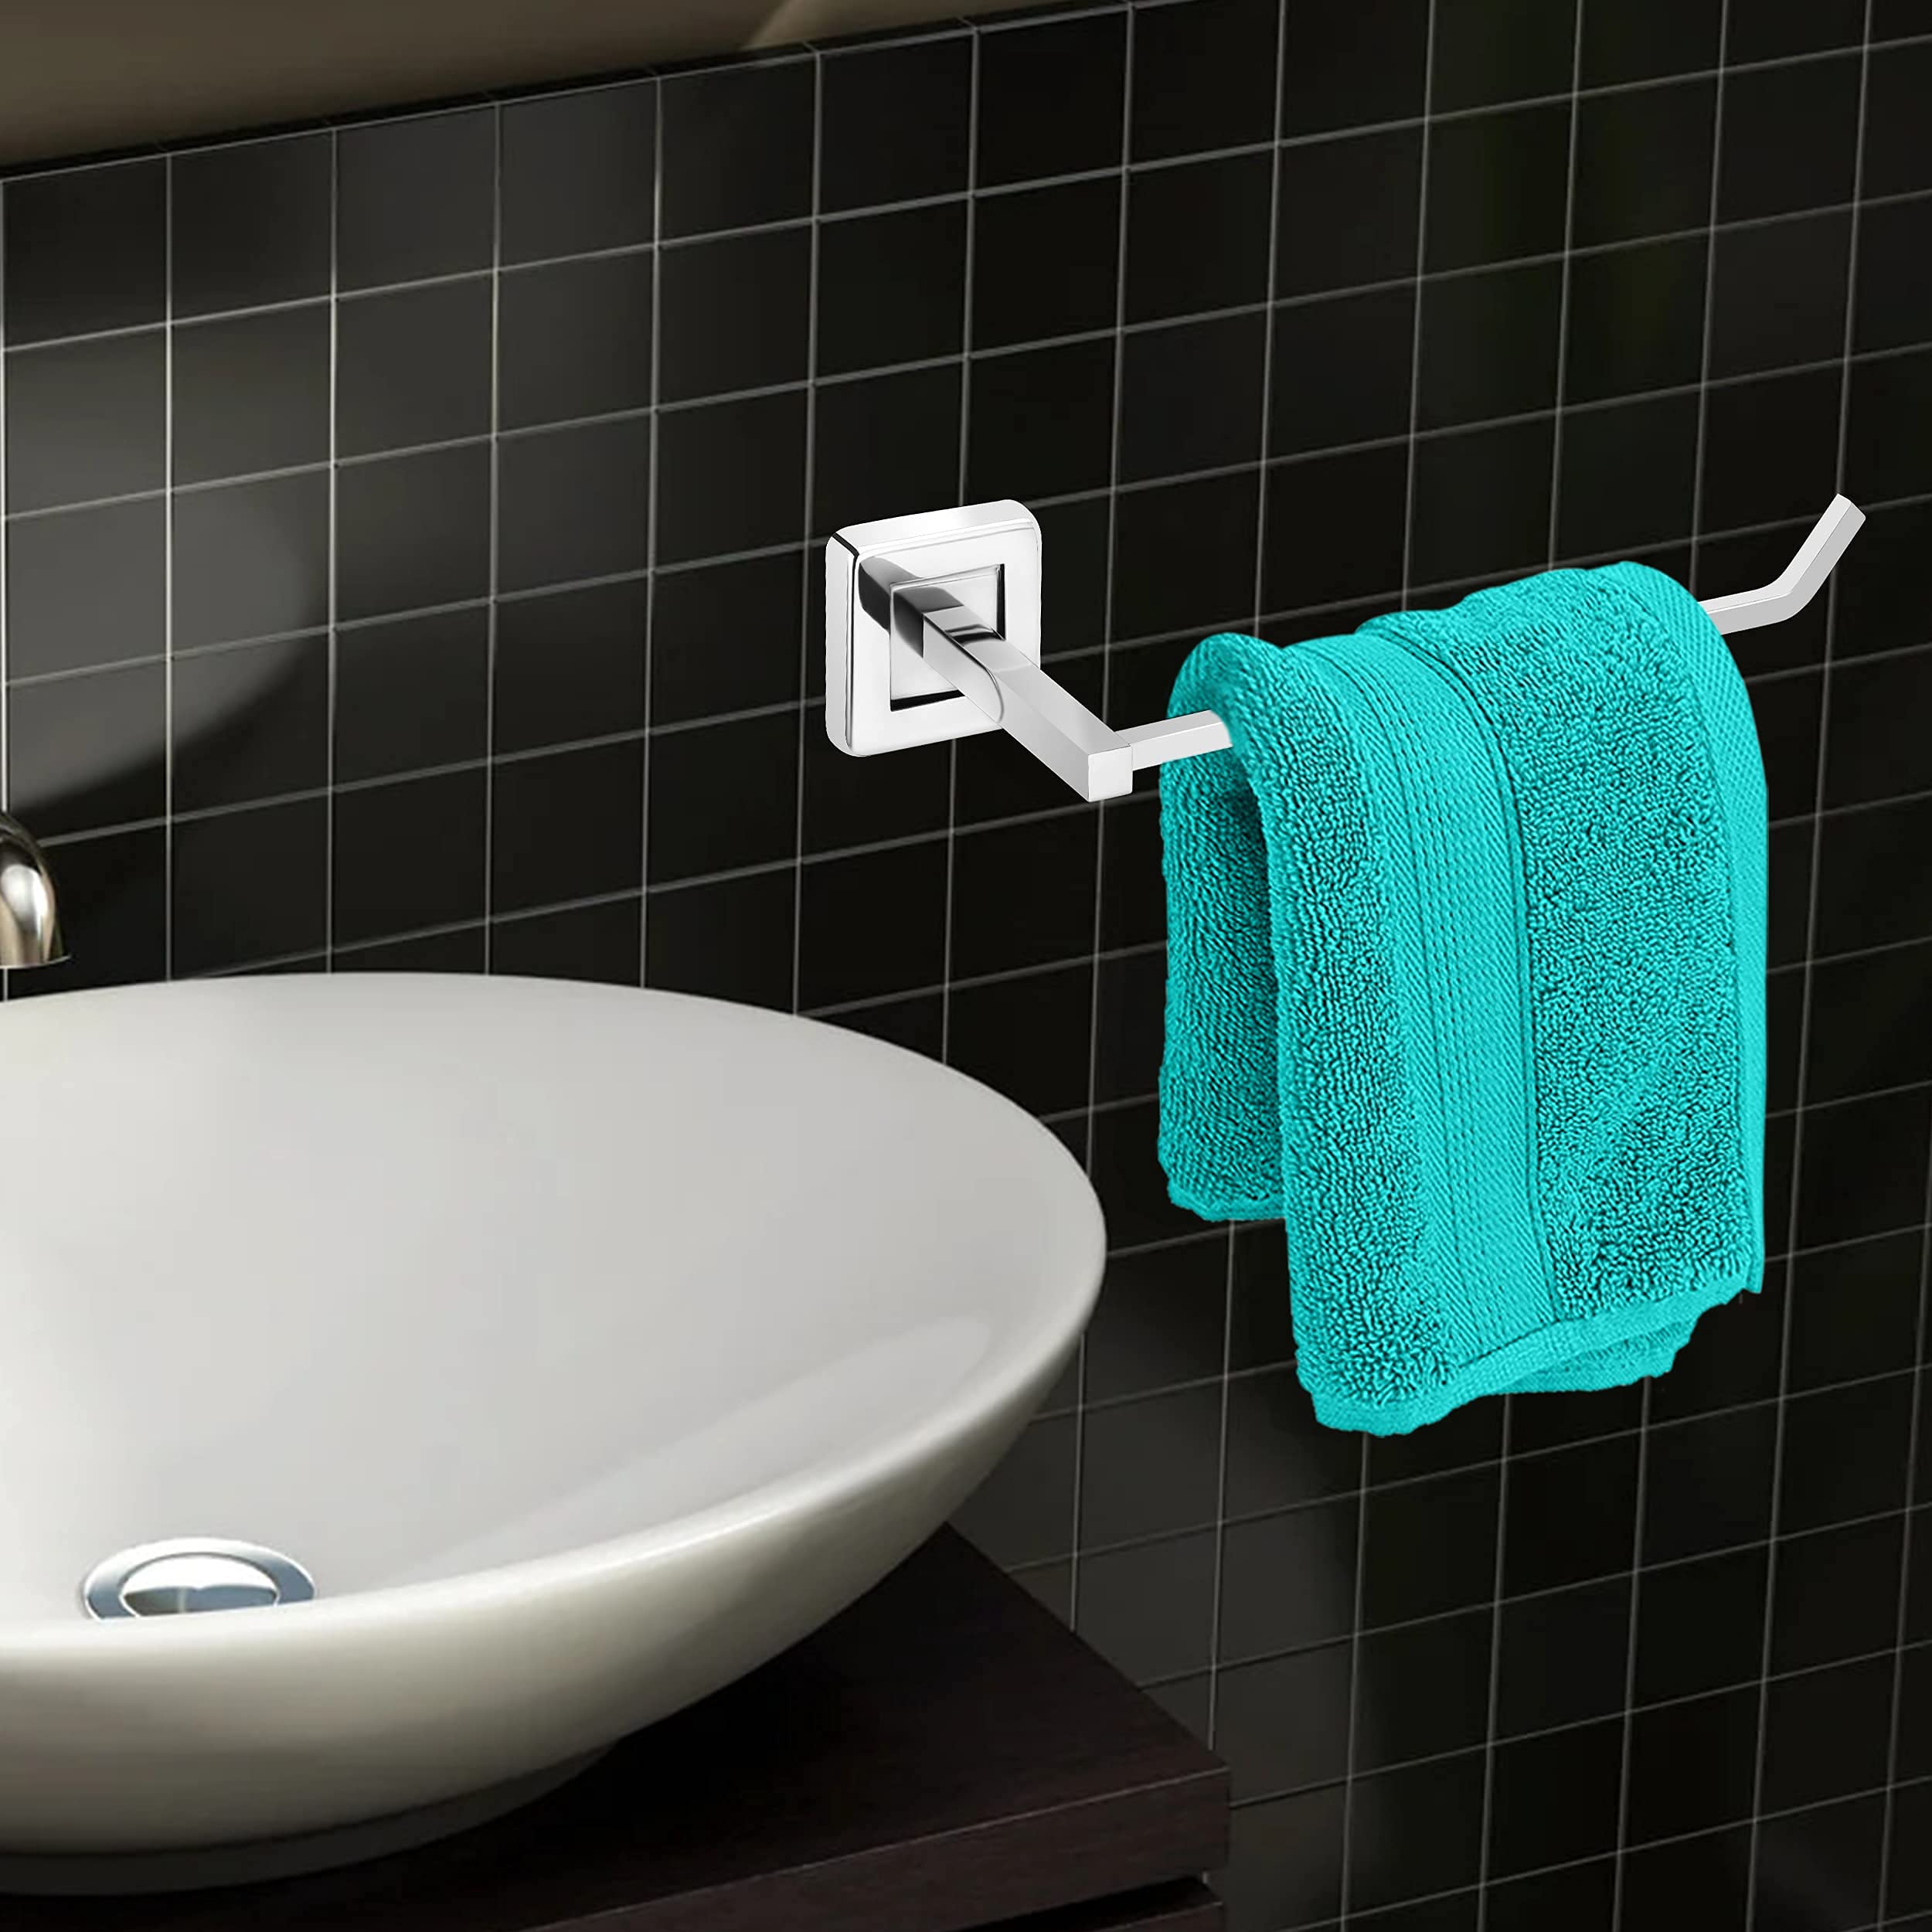 Plantex Stainless Steel Napkin Ring/Towel Ring/Holder/Towel Hanger/Bathroom Accessories (Chrome) - Pack of 1